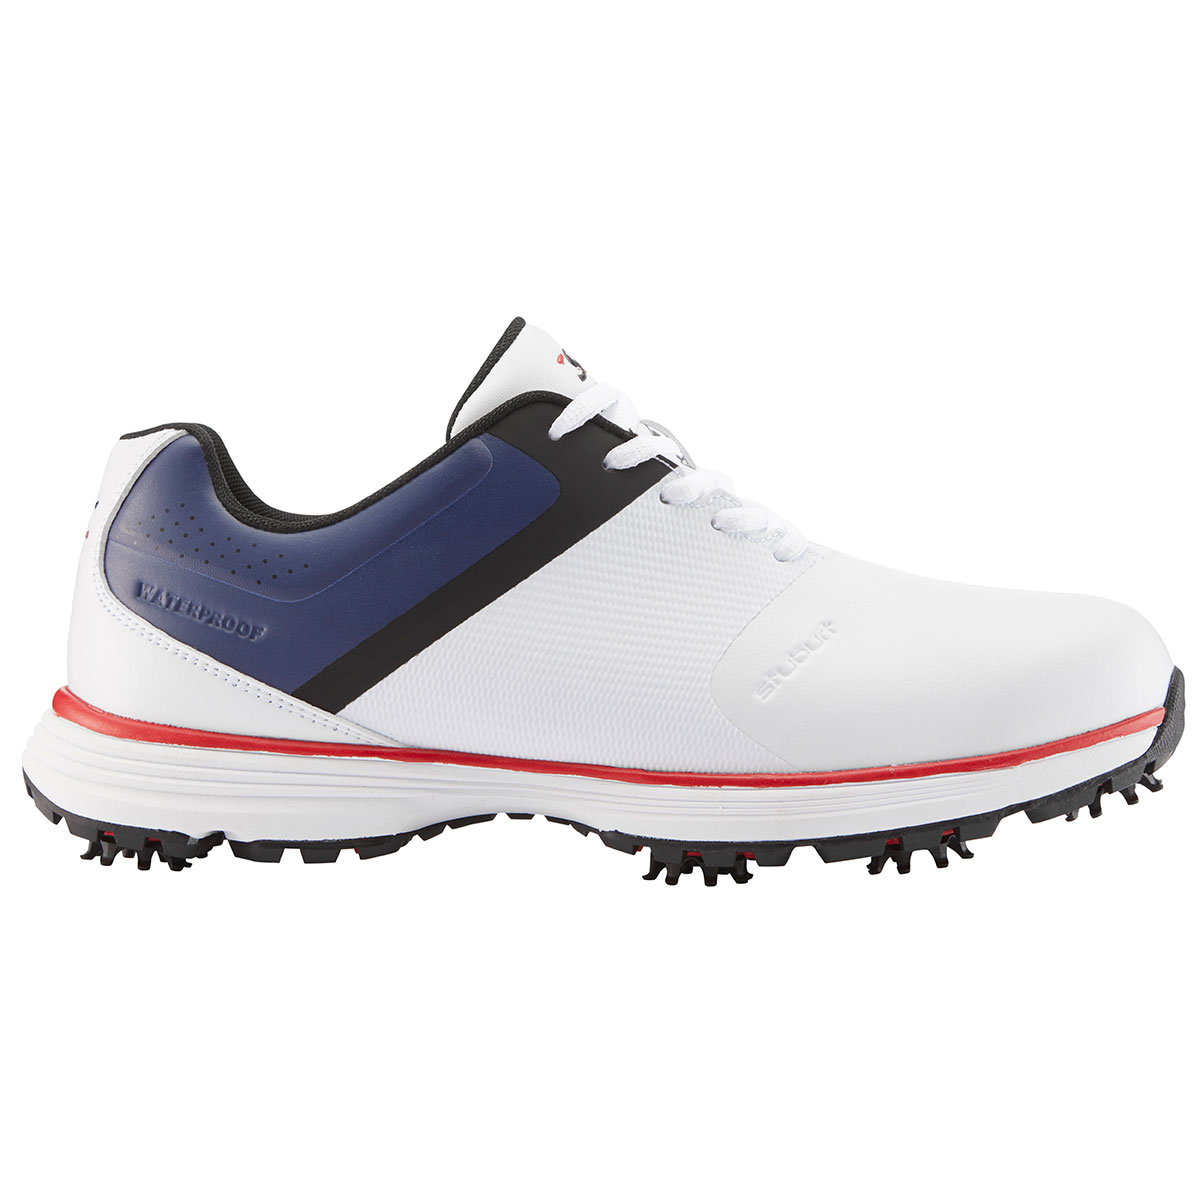 Stuburt PCT II Shoes from american golf